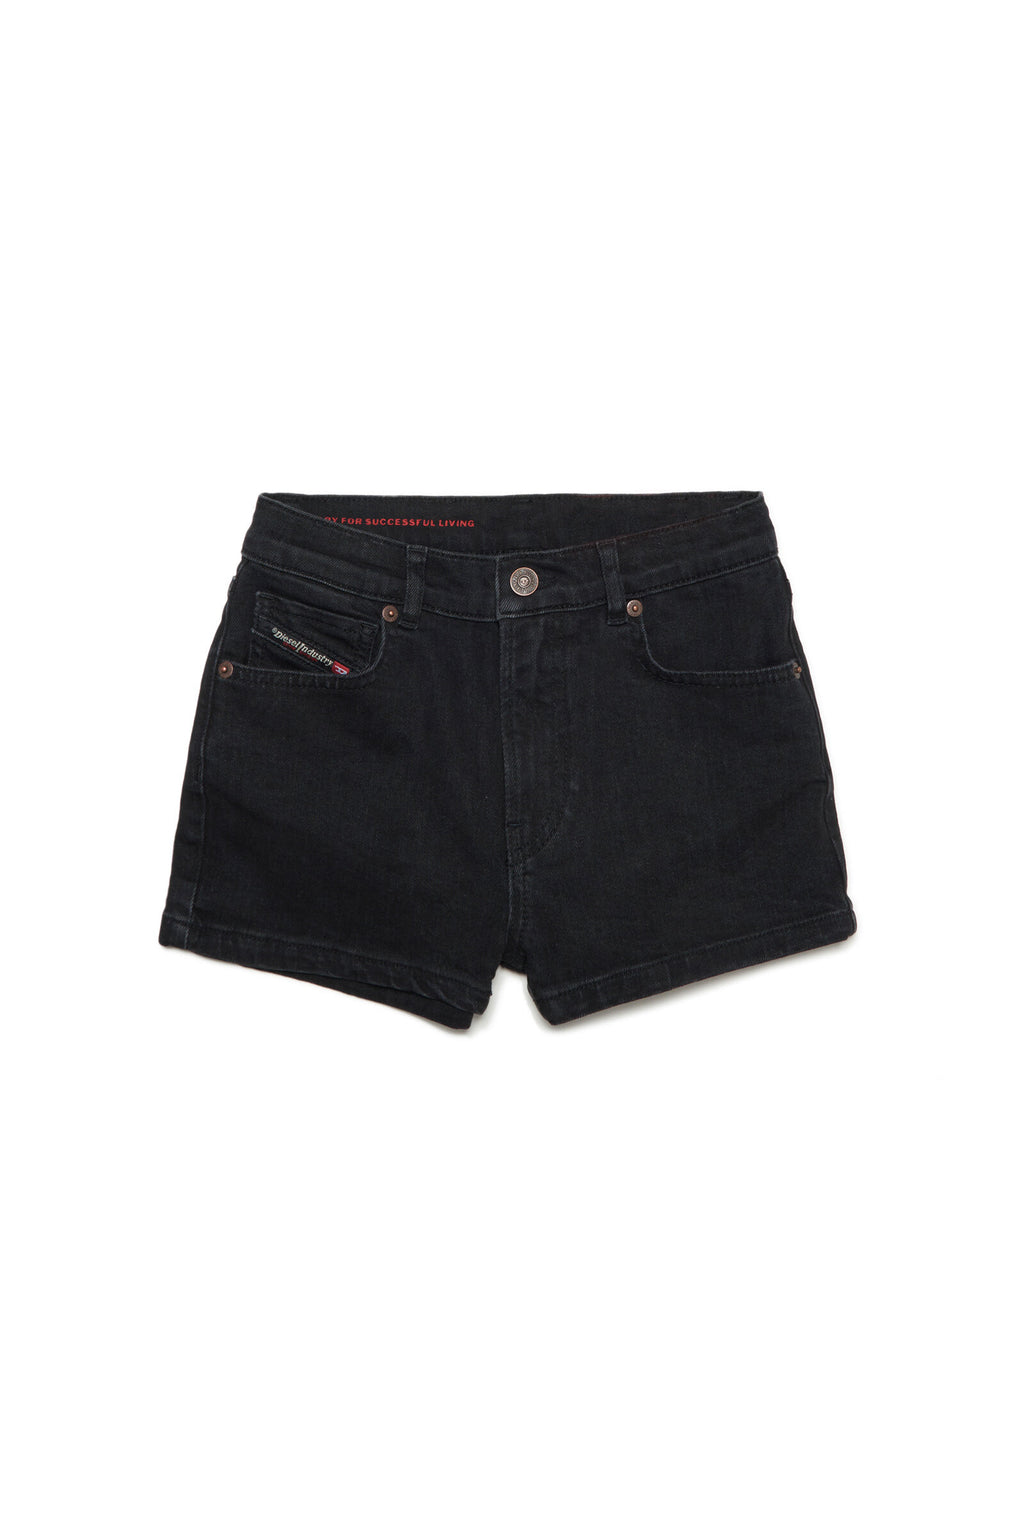 Shorts in denim nero modello 5 pockets